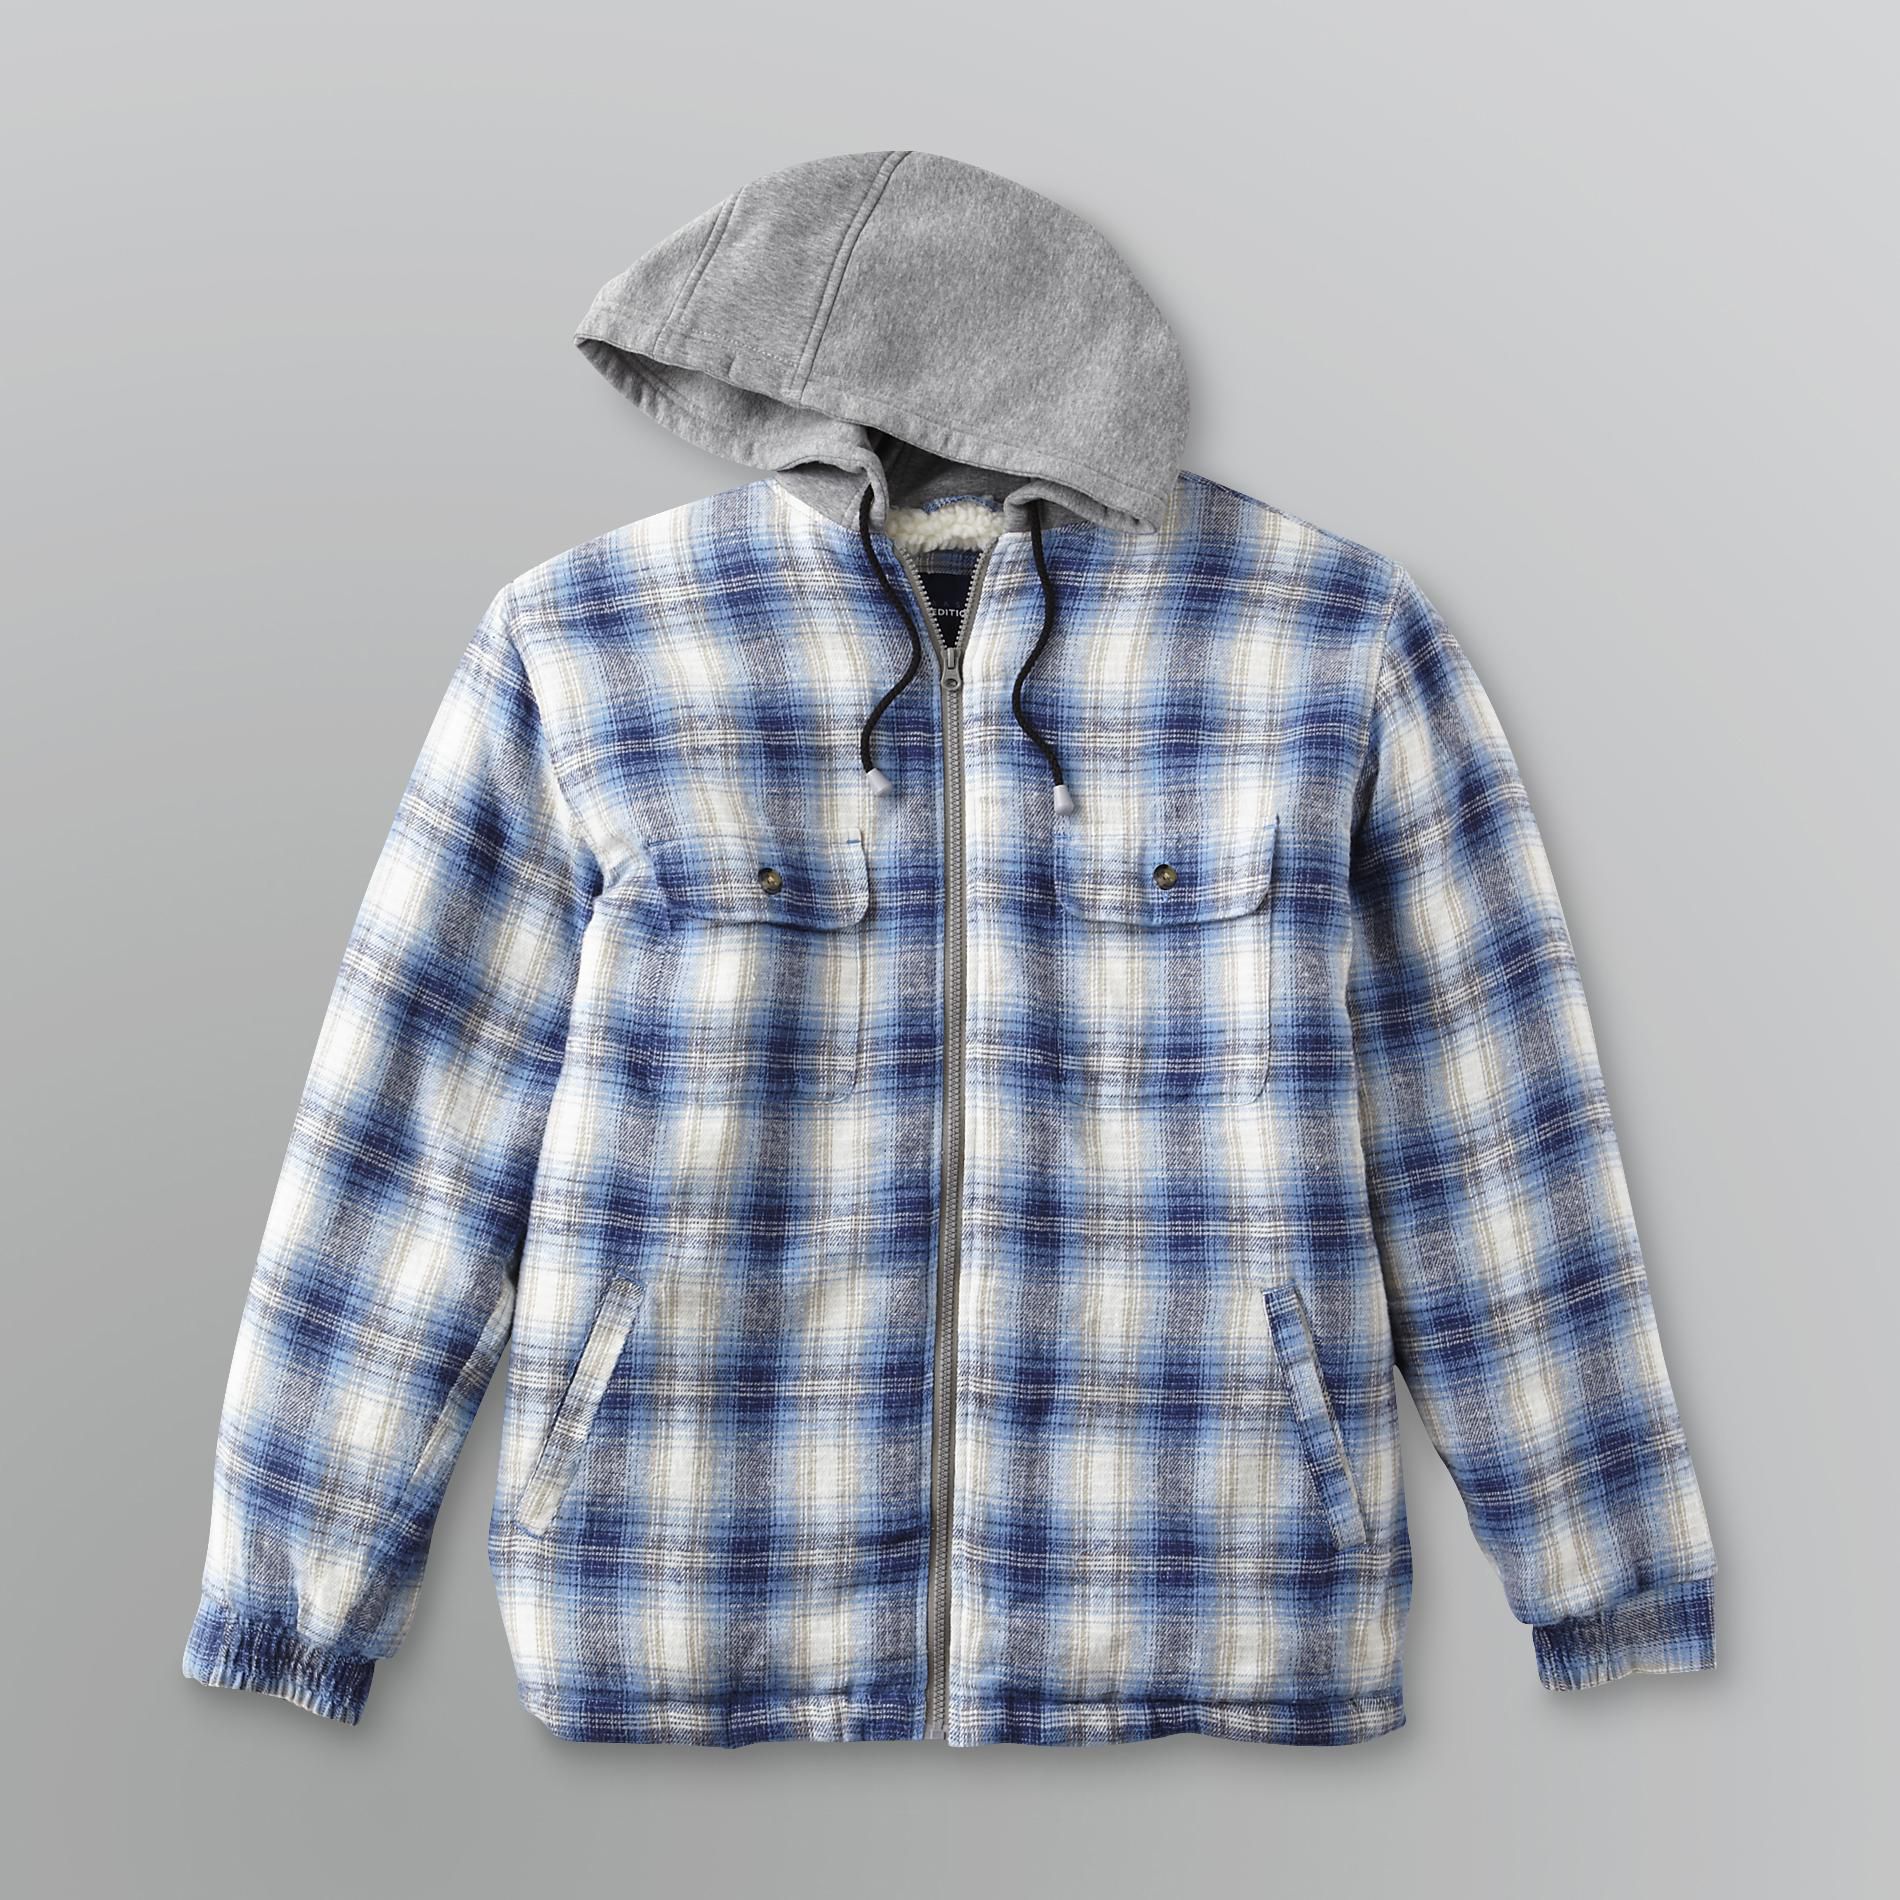 Basic Editions Men's Fleece-Lined Flannel Hoodie Jacket